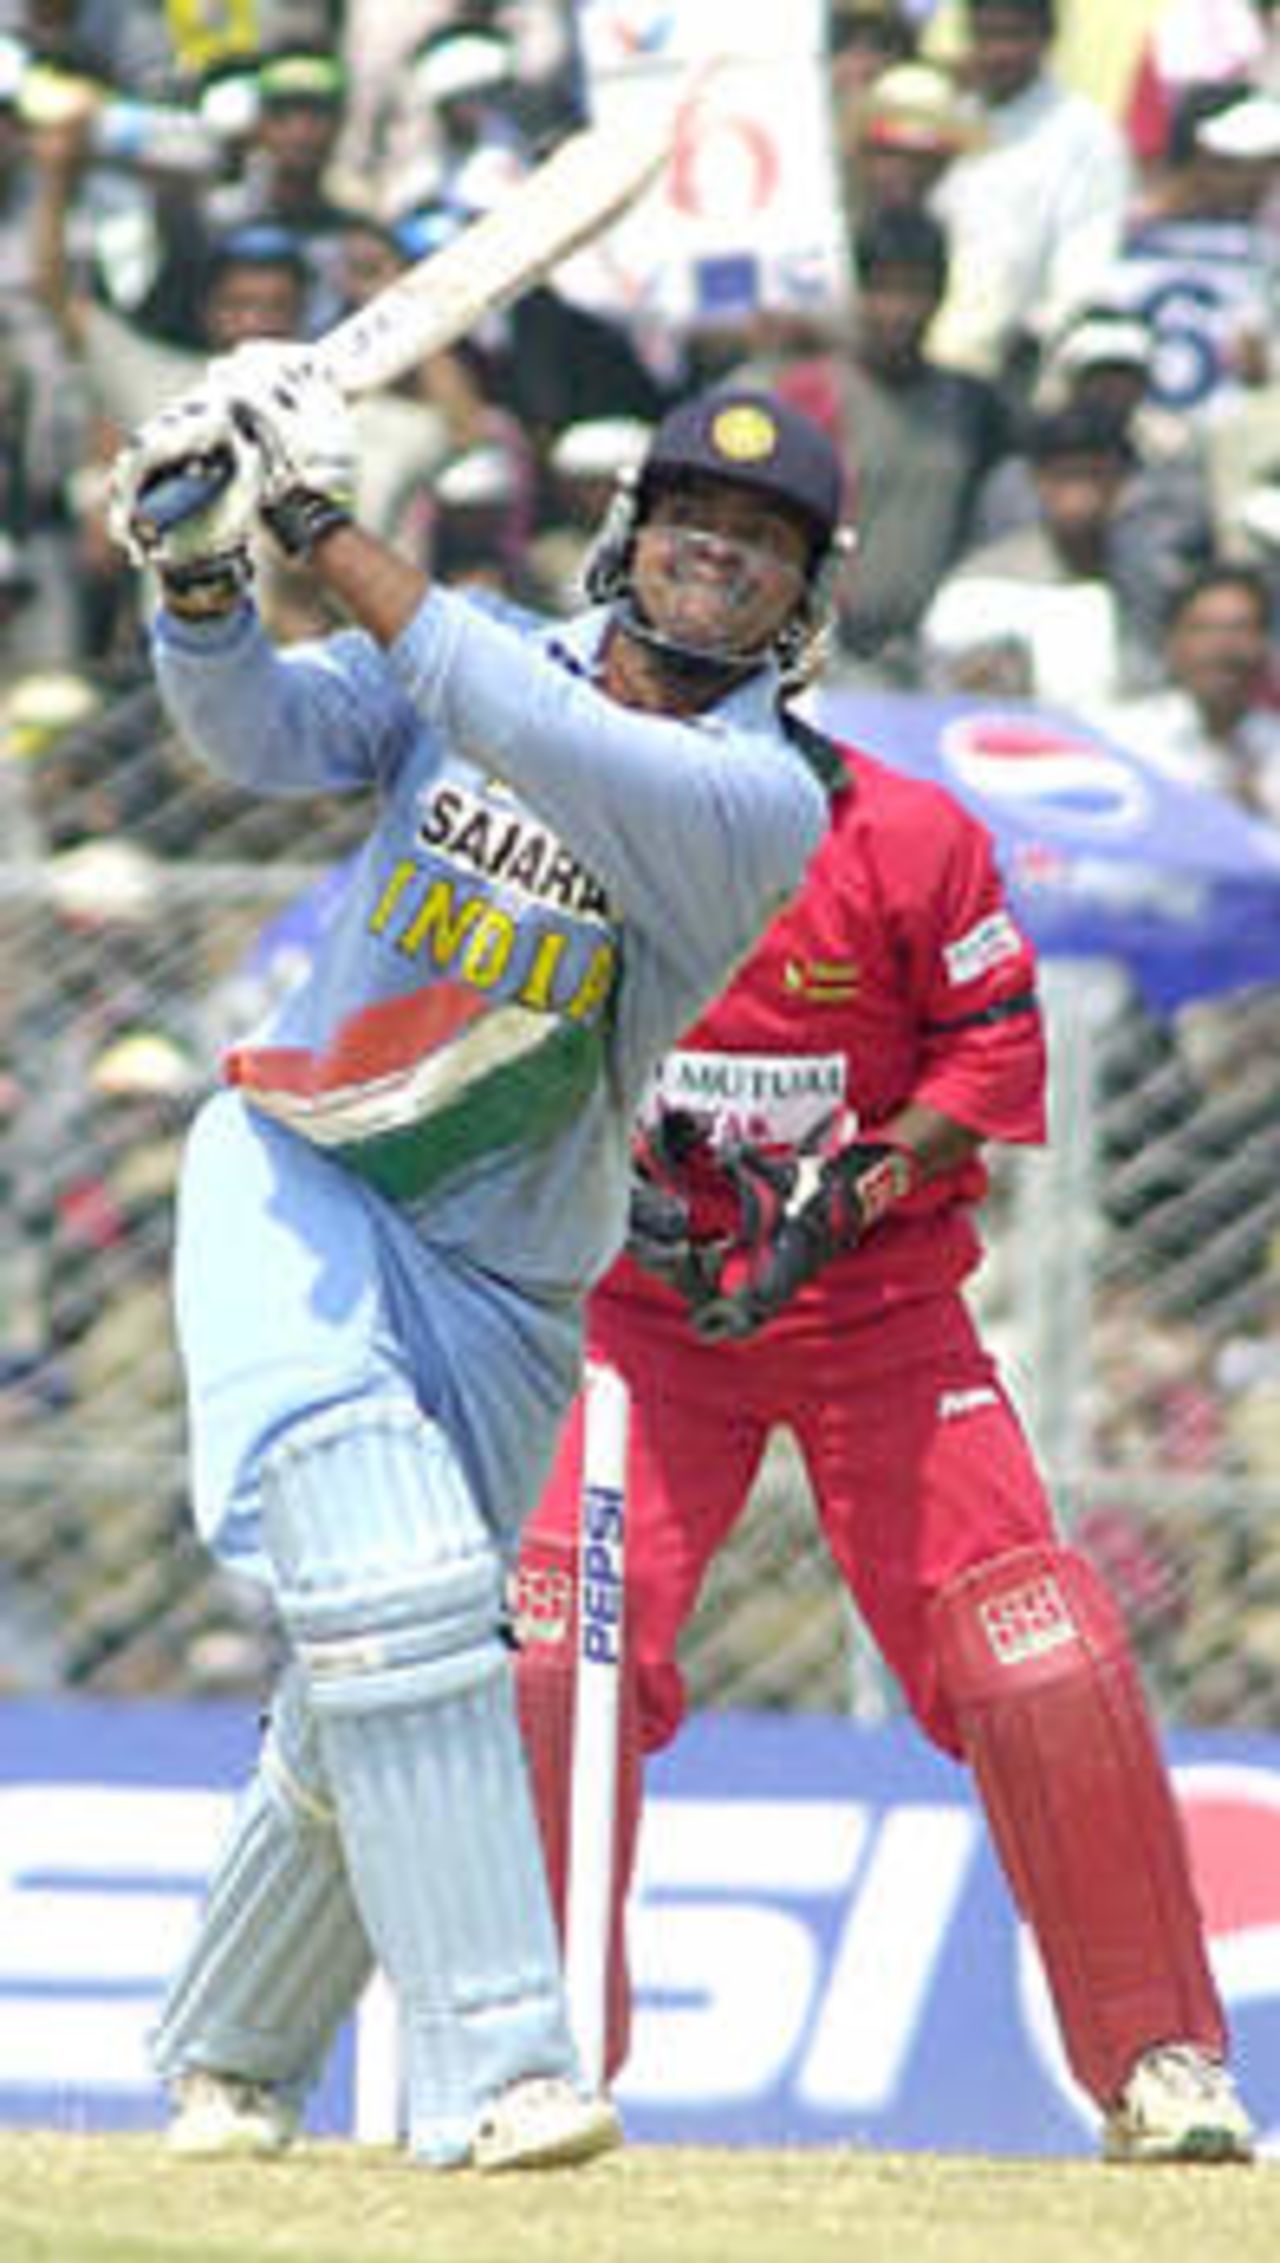 India v Zimbabwe, 5th One-Day International, Nehru Stadium, Guwahati, 19 March 2002